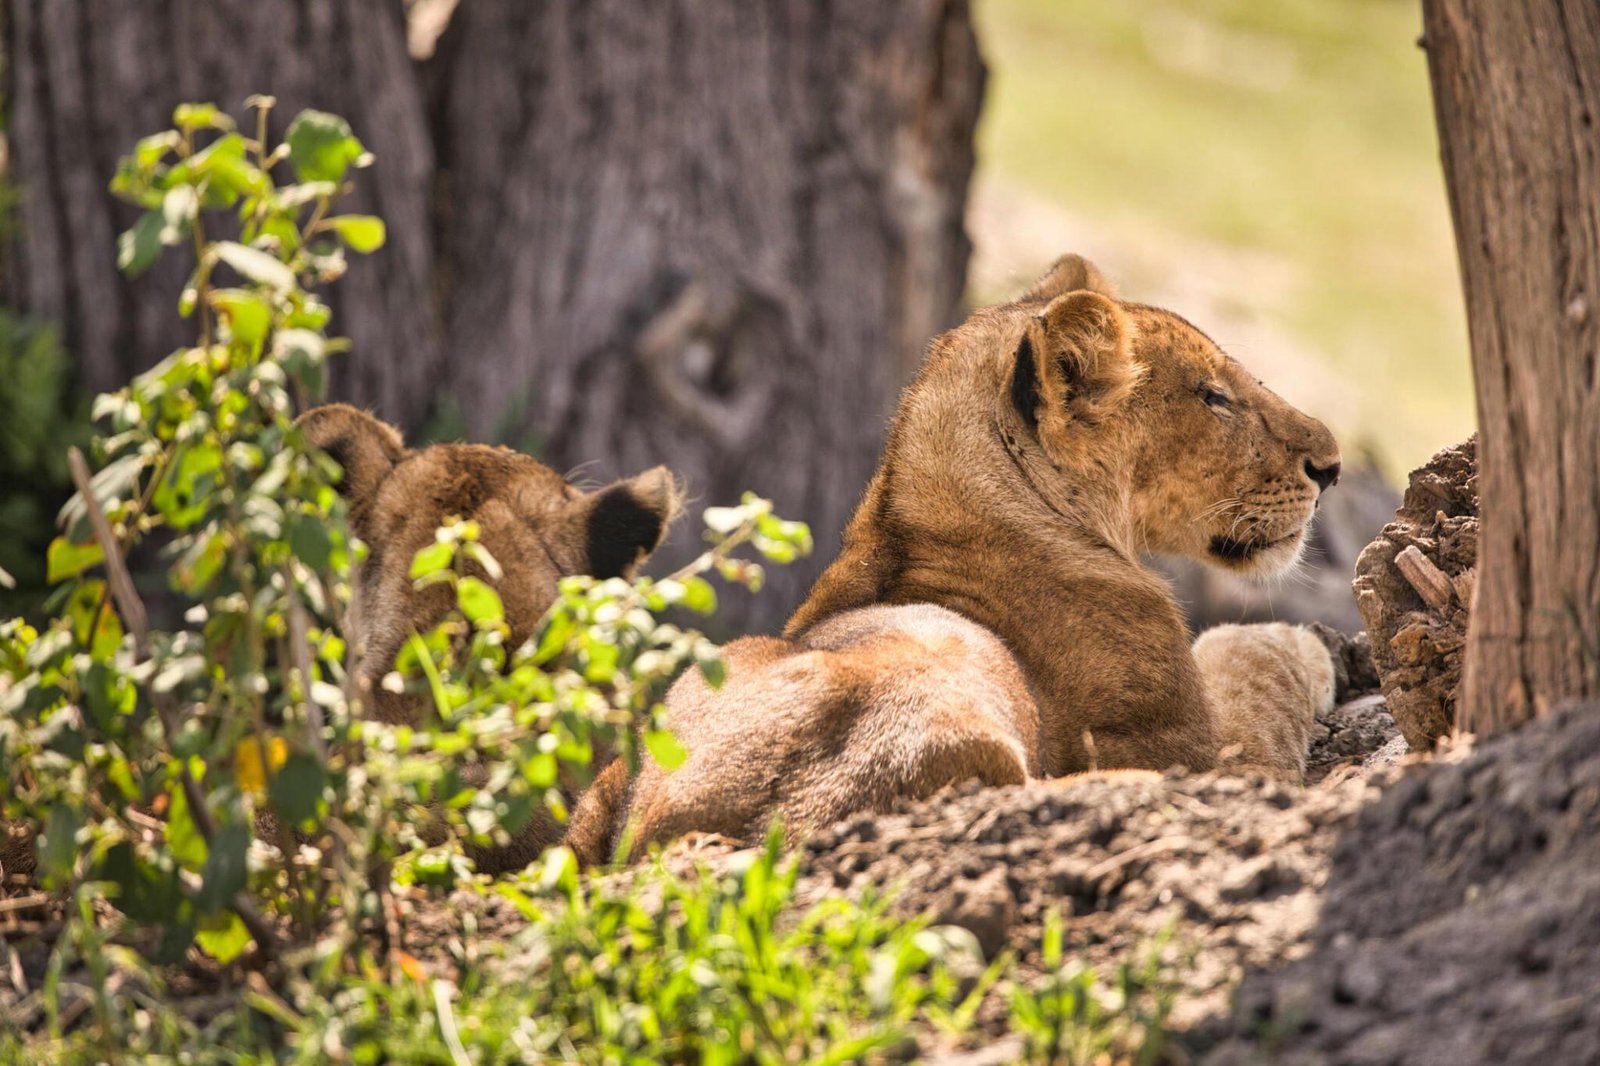 3 days kenya safari to amboseli national park